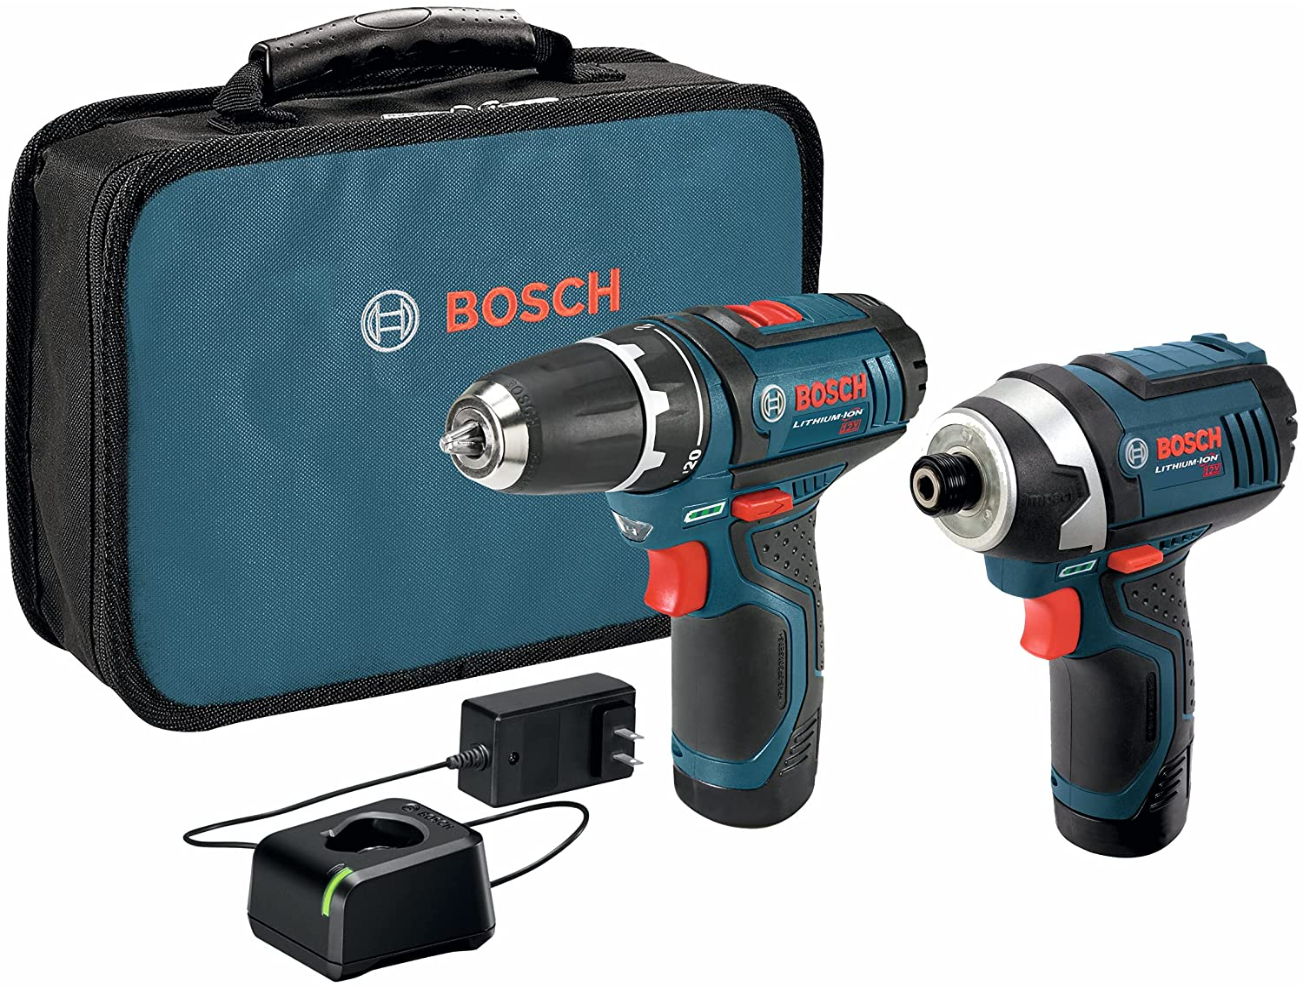 Bosch 12V Max 2-Tool Lithium-Ion Cordless Combo Kit - CLPK22-120